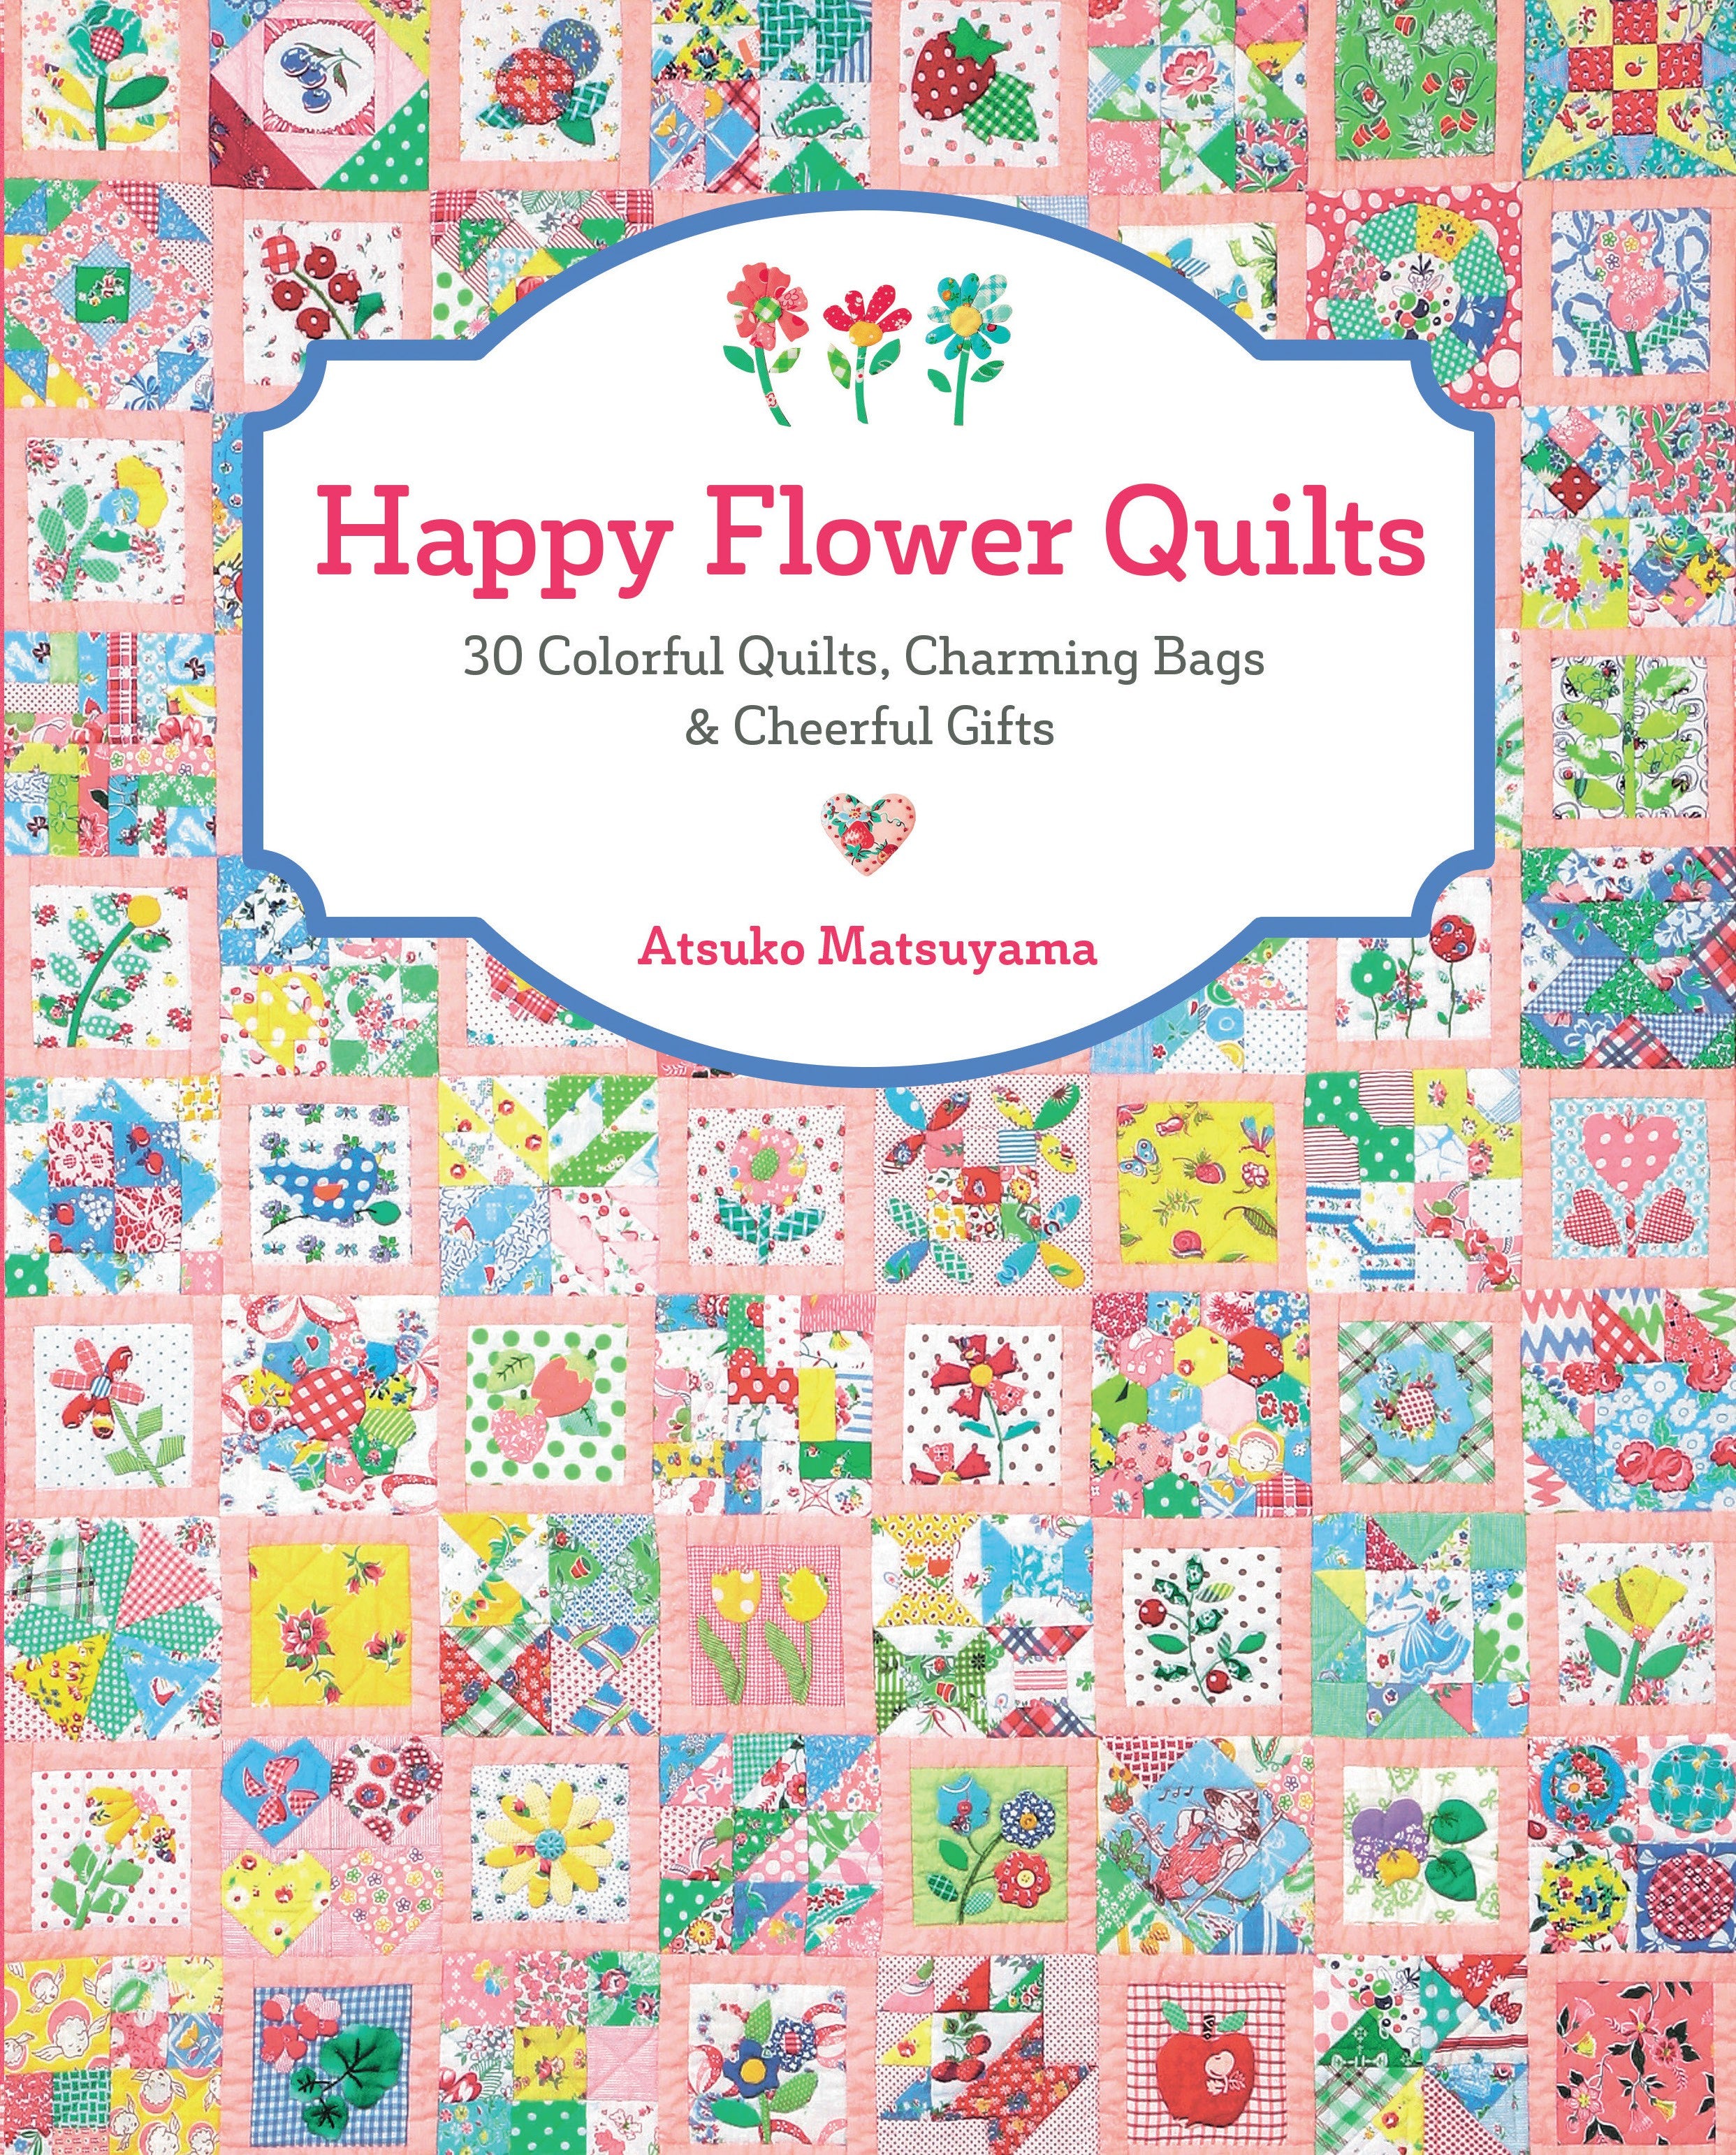 Happy Flower Quilts Pattern Book by Atsuko Matsuyama for Zakka Workshop